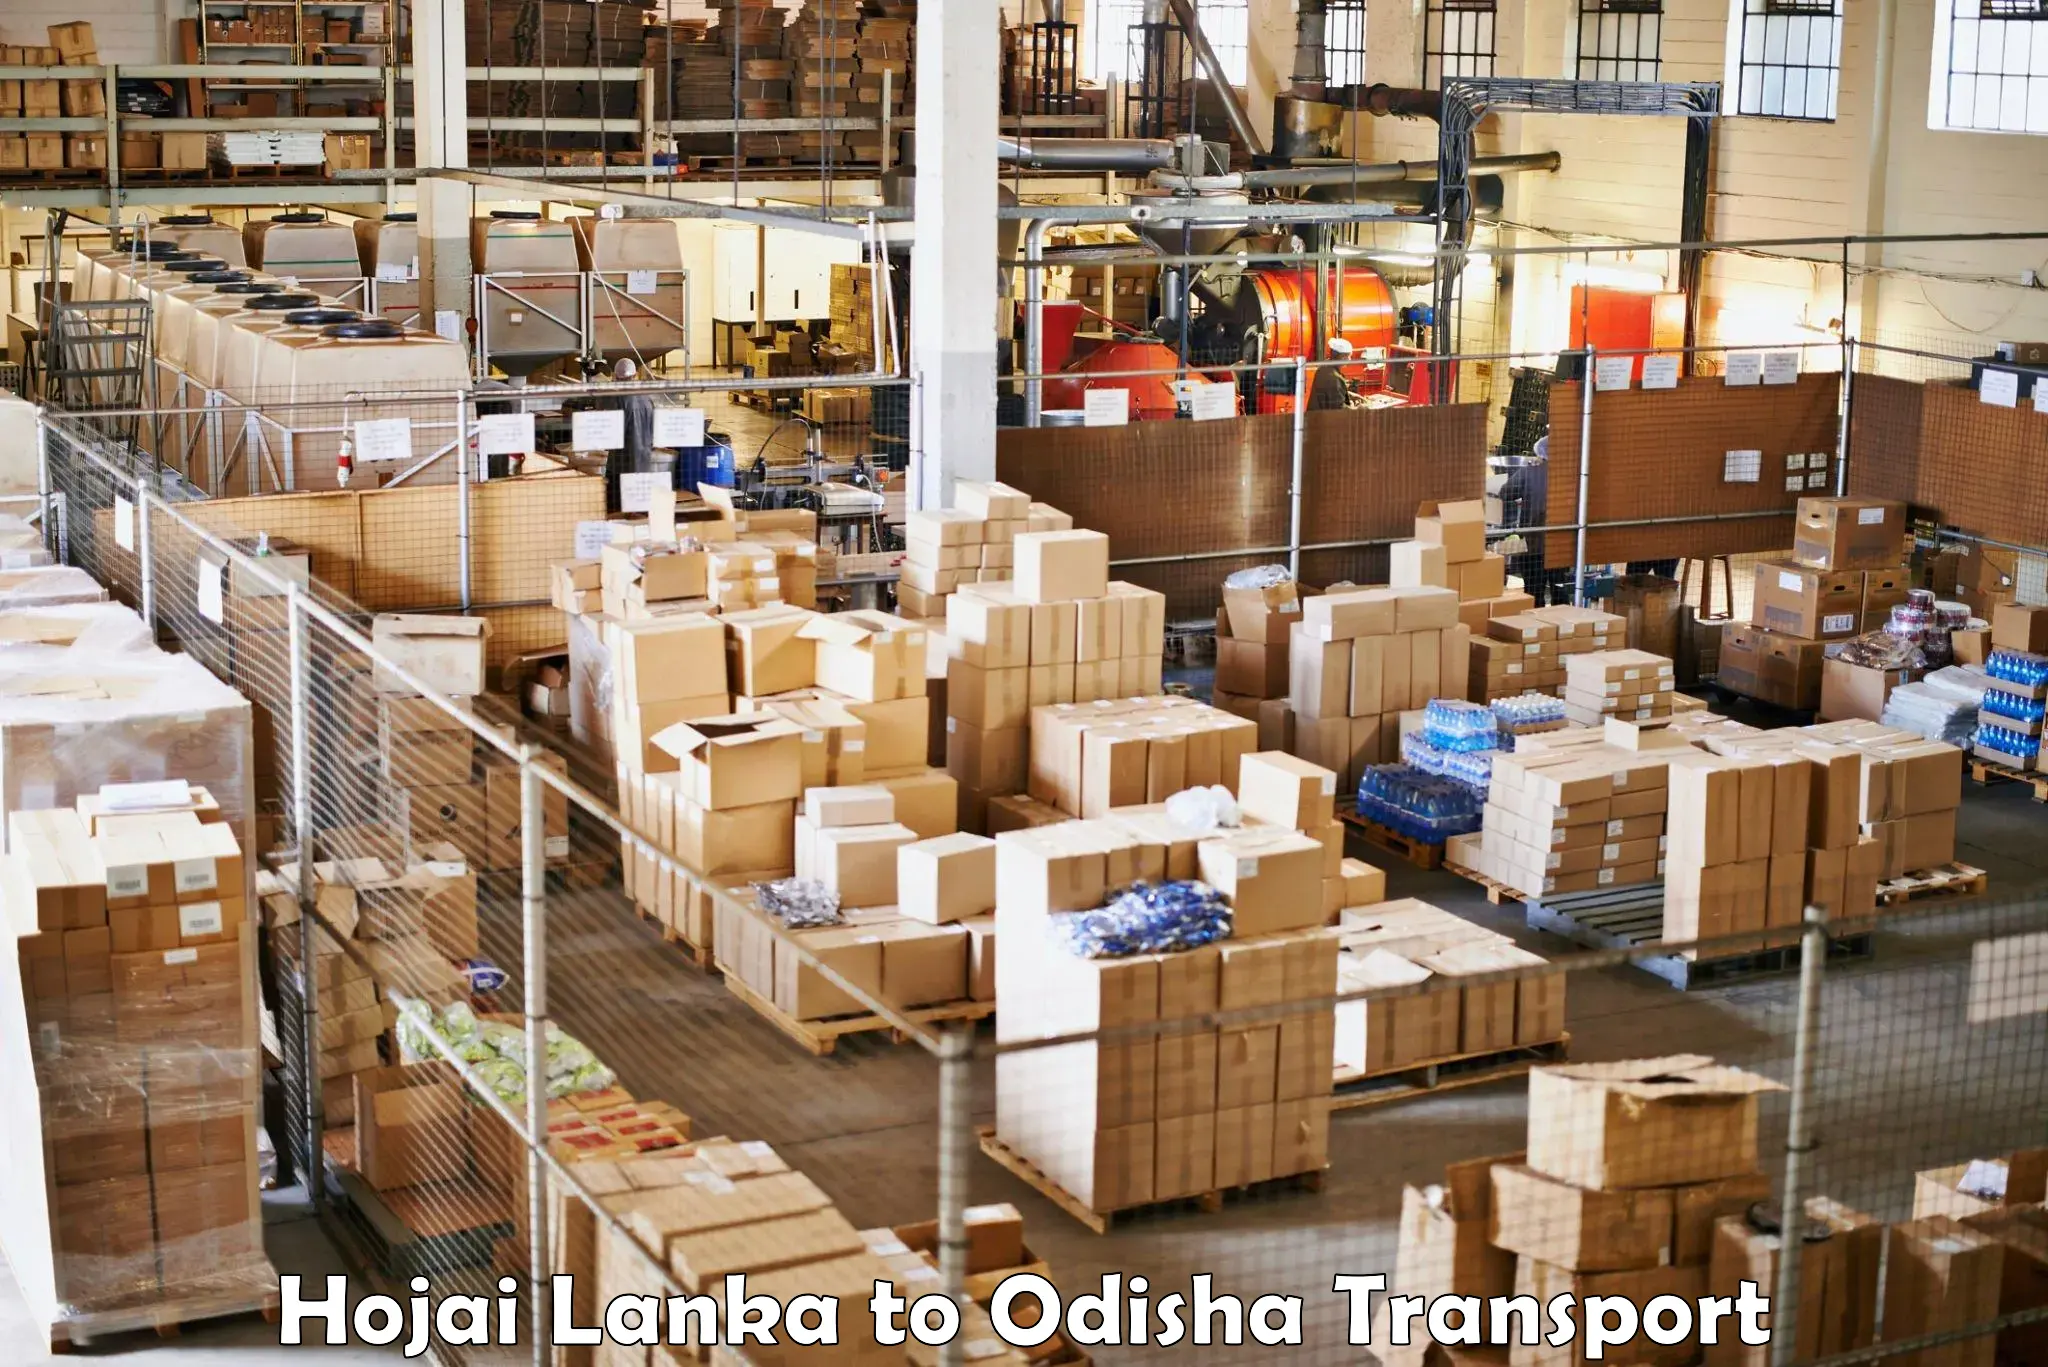 Parcel transport services Hojai Lanka to Komana